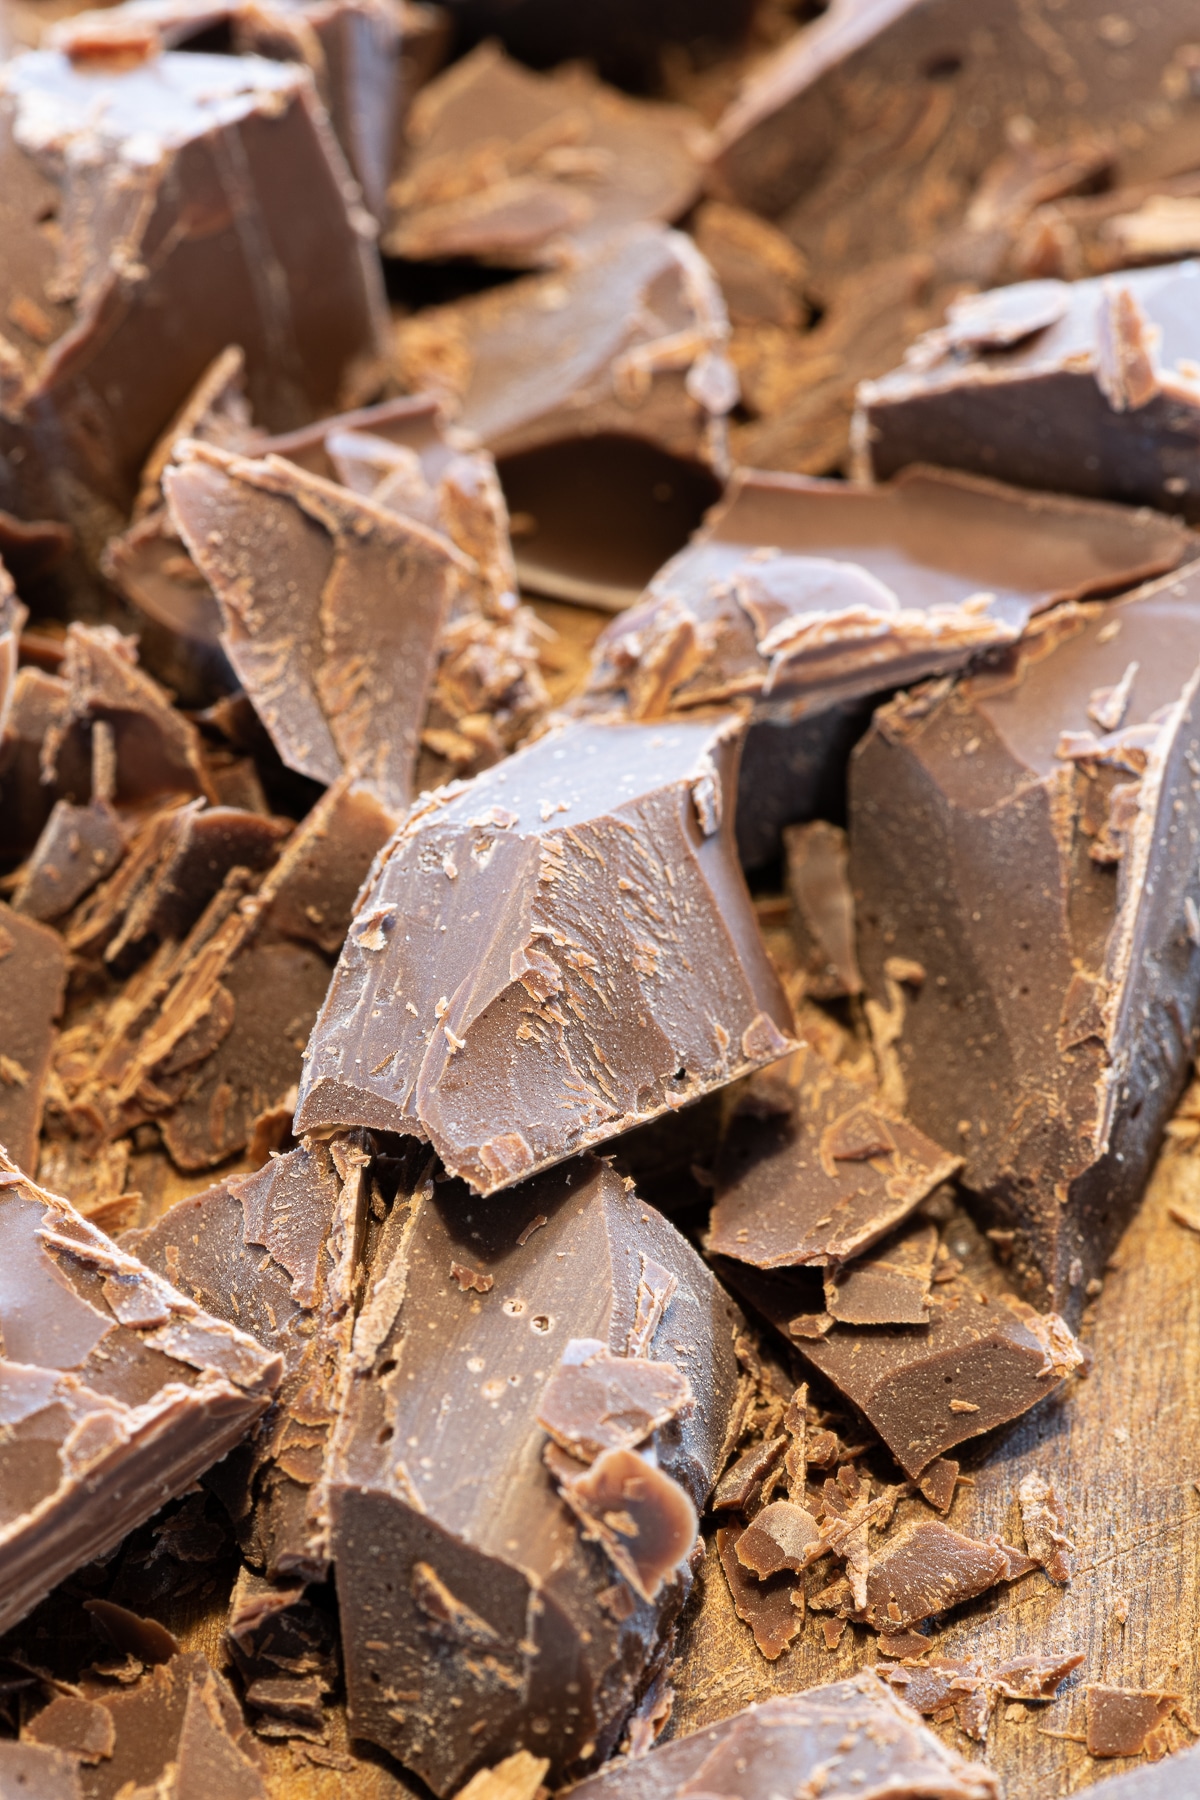 A pile of decadent chocolate chunks.